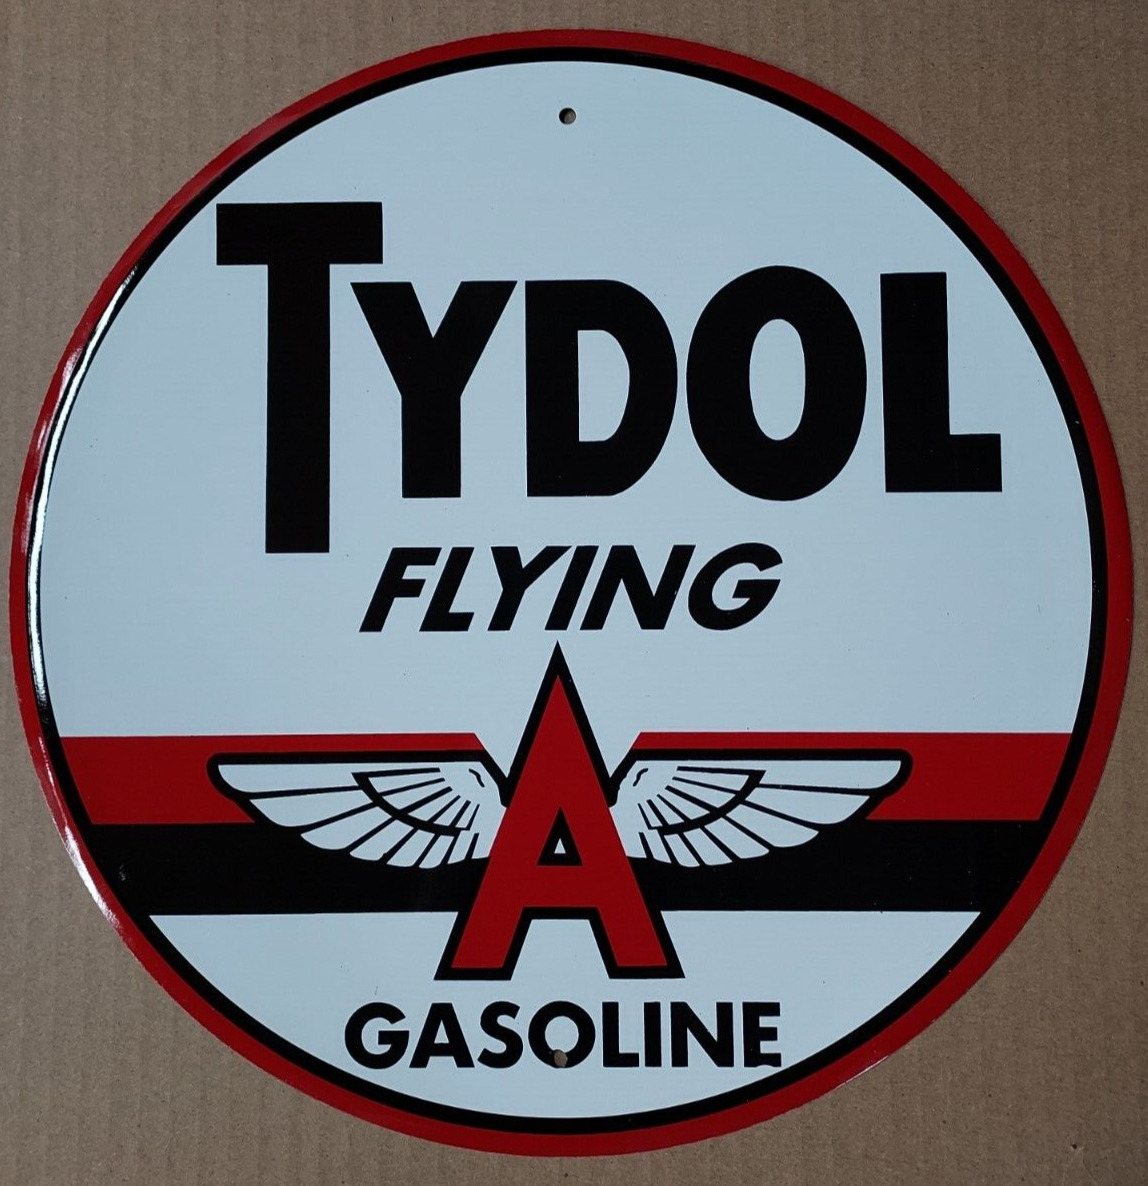 Tydol Gas Sign Flying A Round Metal Vintage Advertising Tin New USA